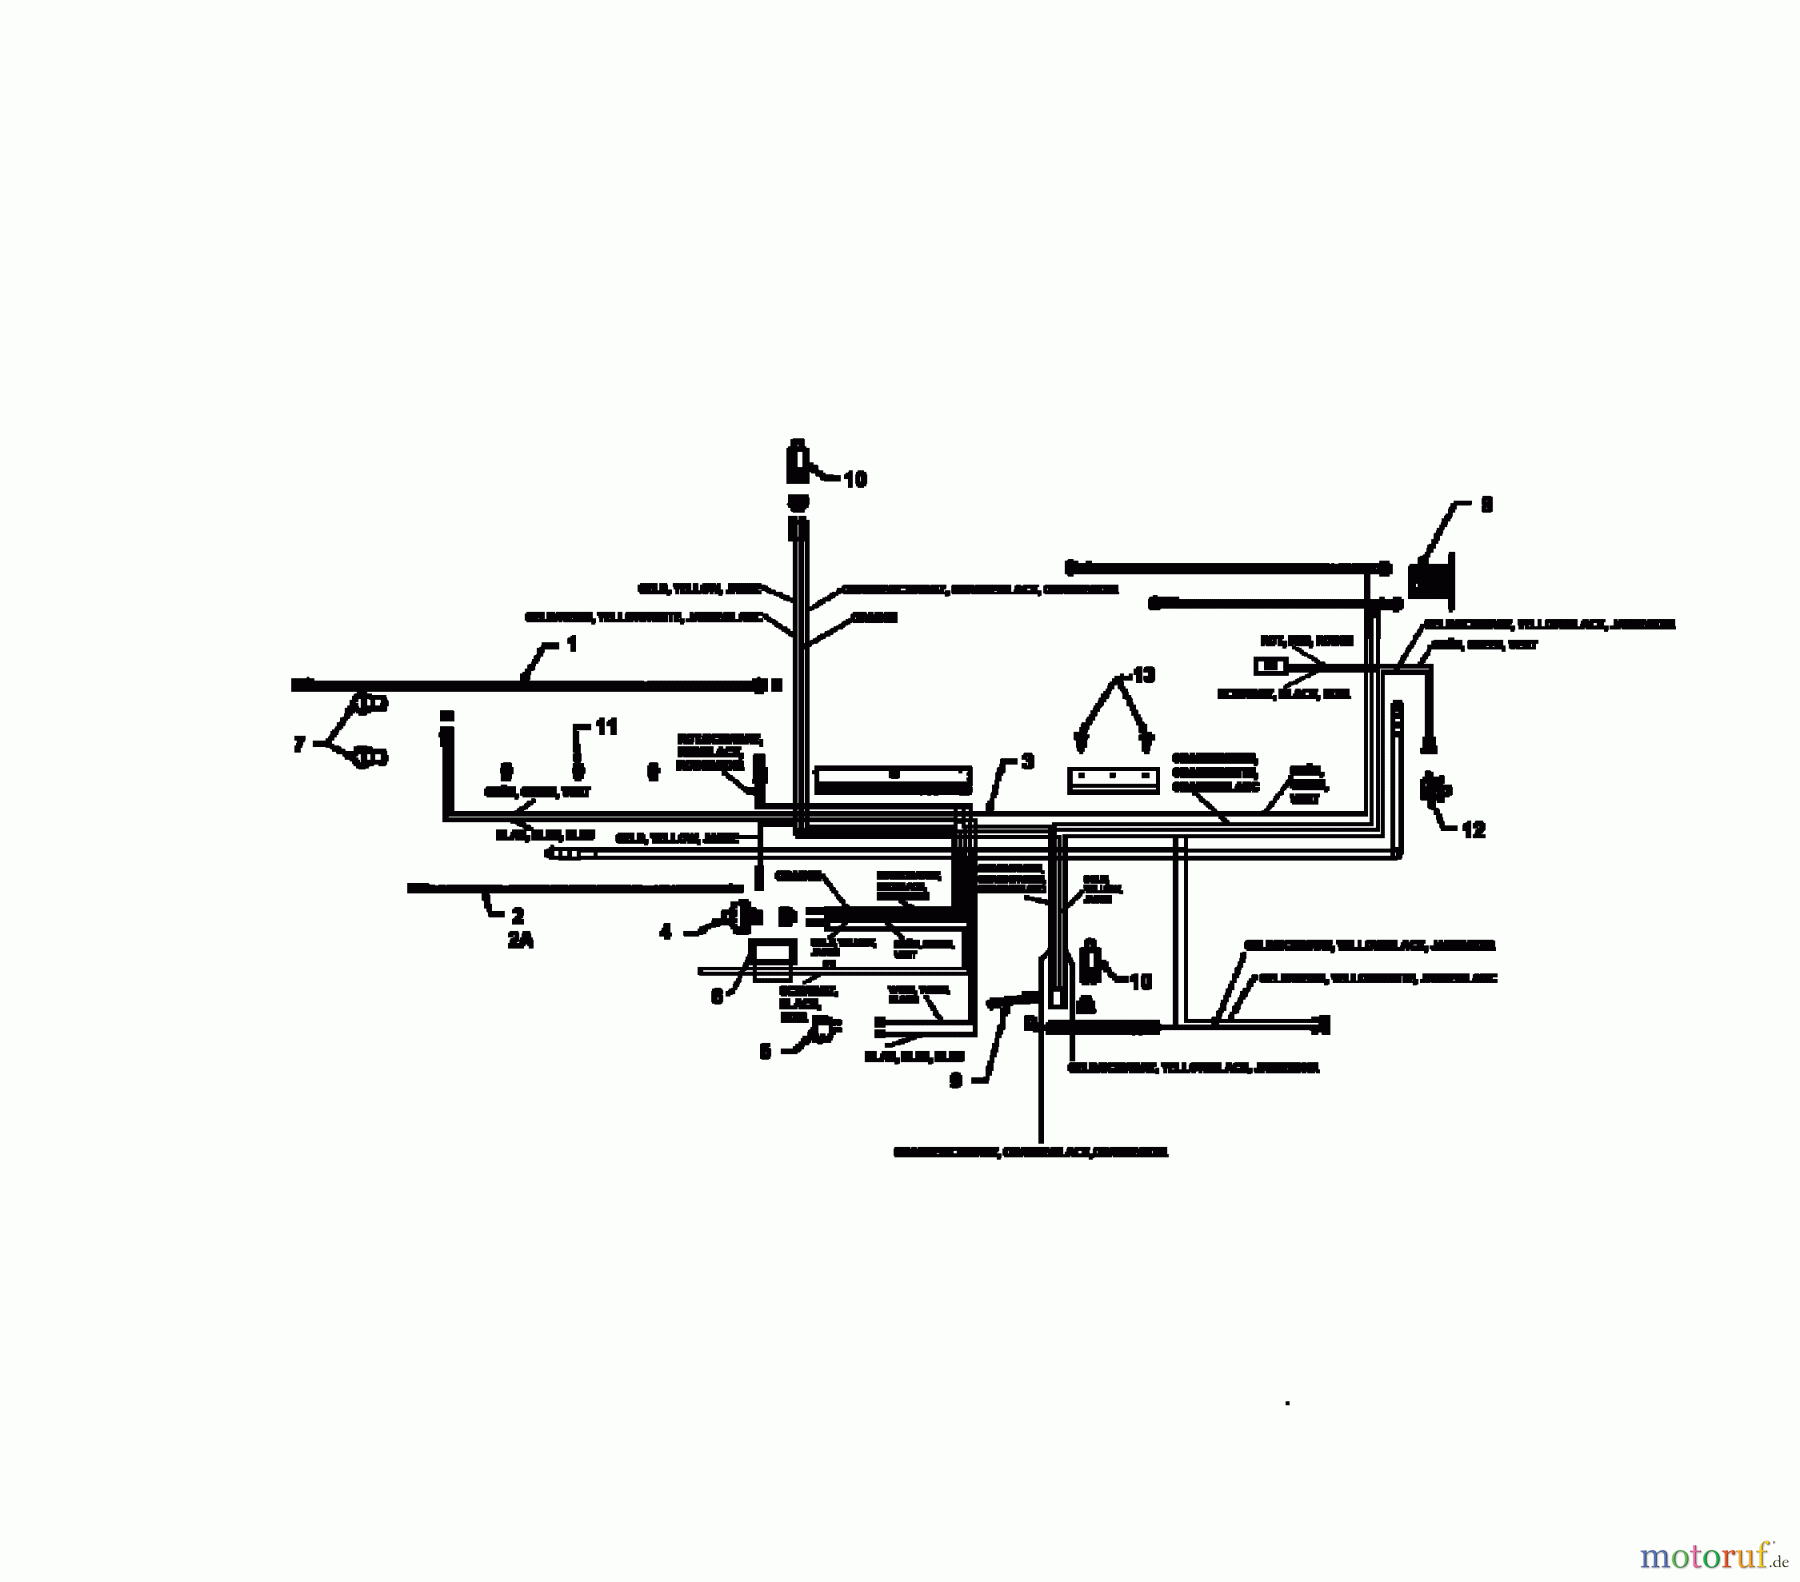  MTD Lawn tractors E 160 13AR765N678  (1997) Wiring diagram Vanguard